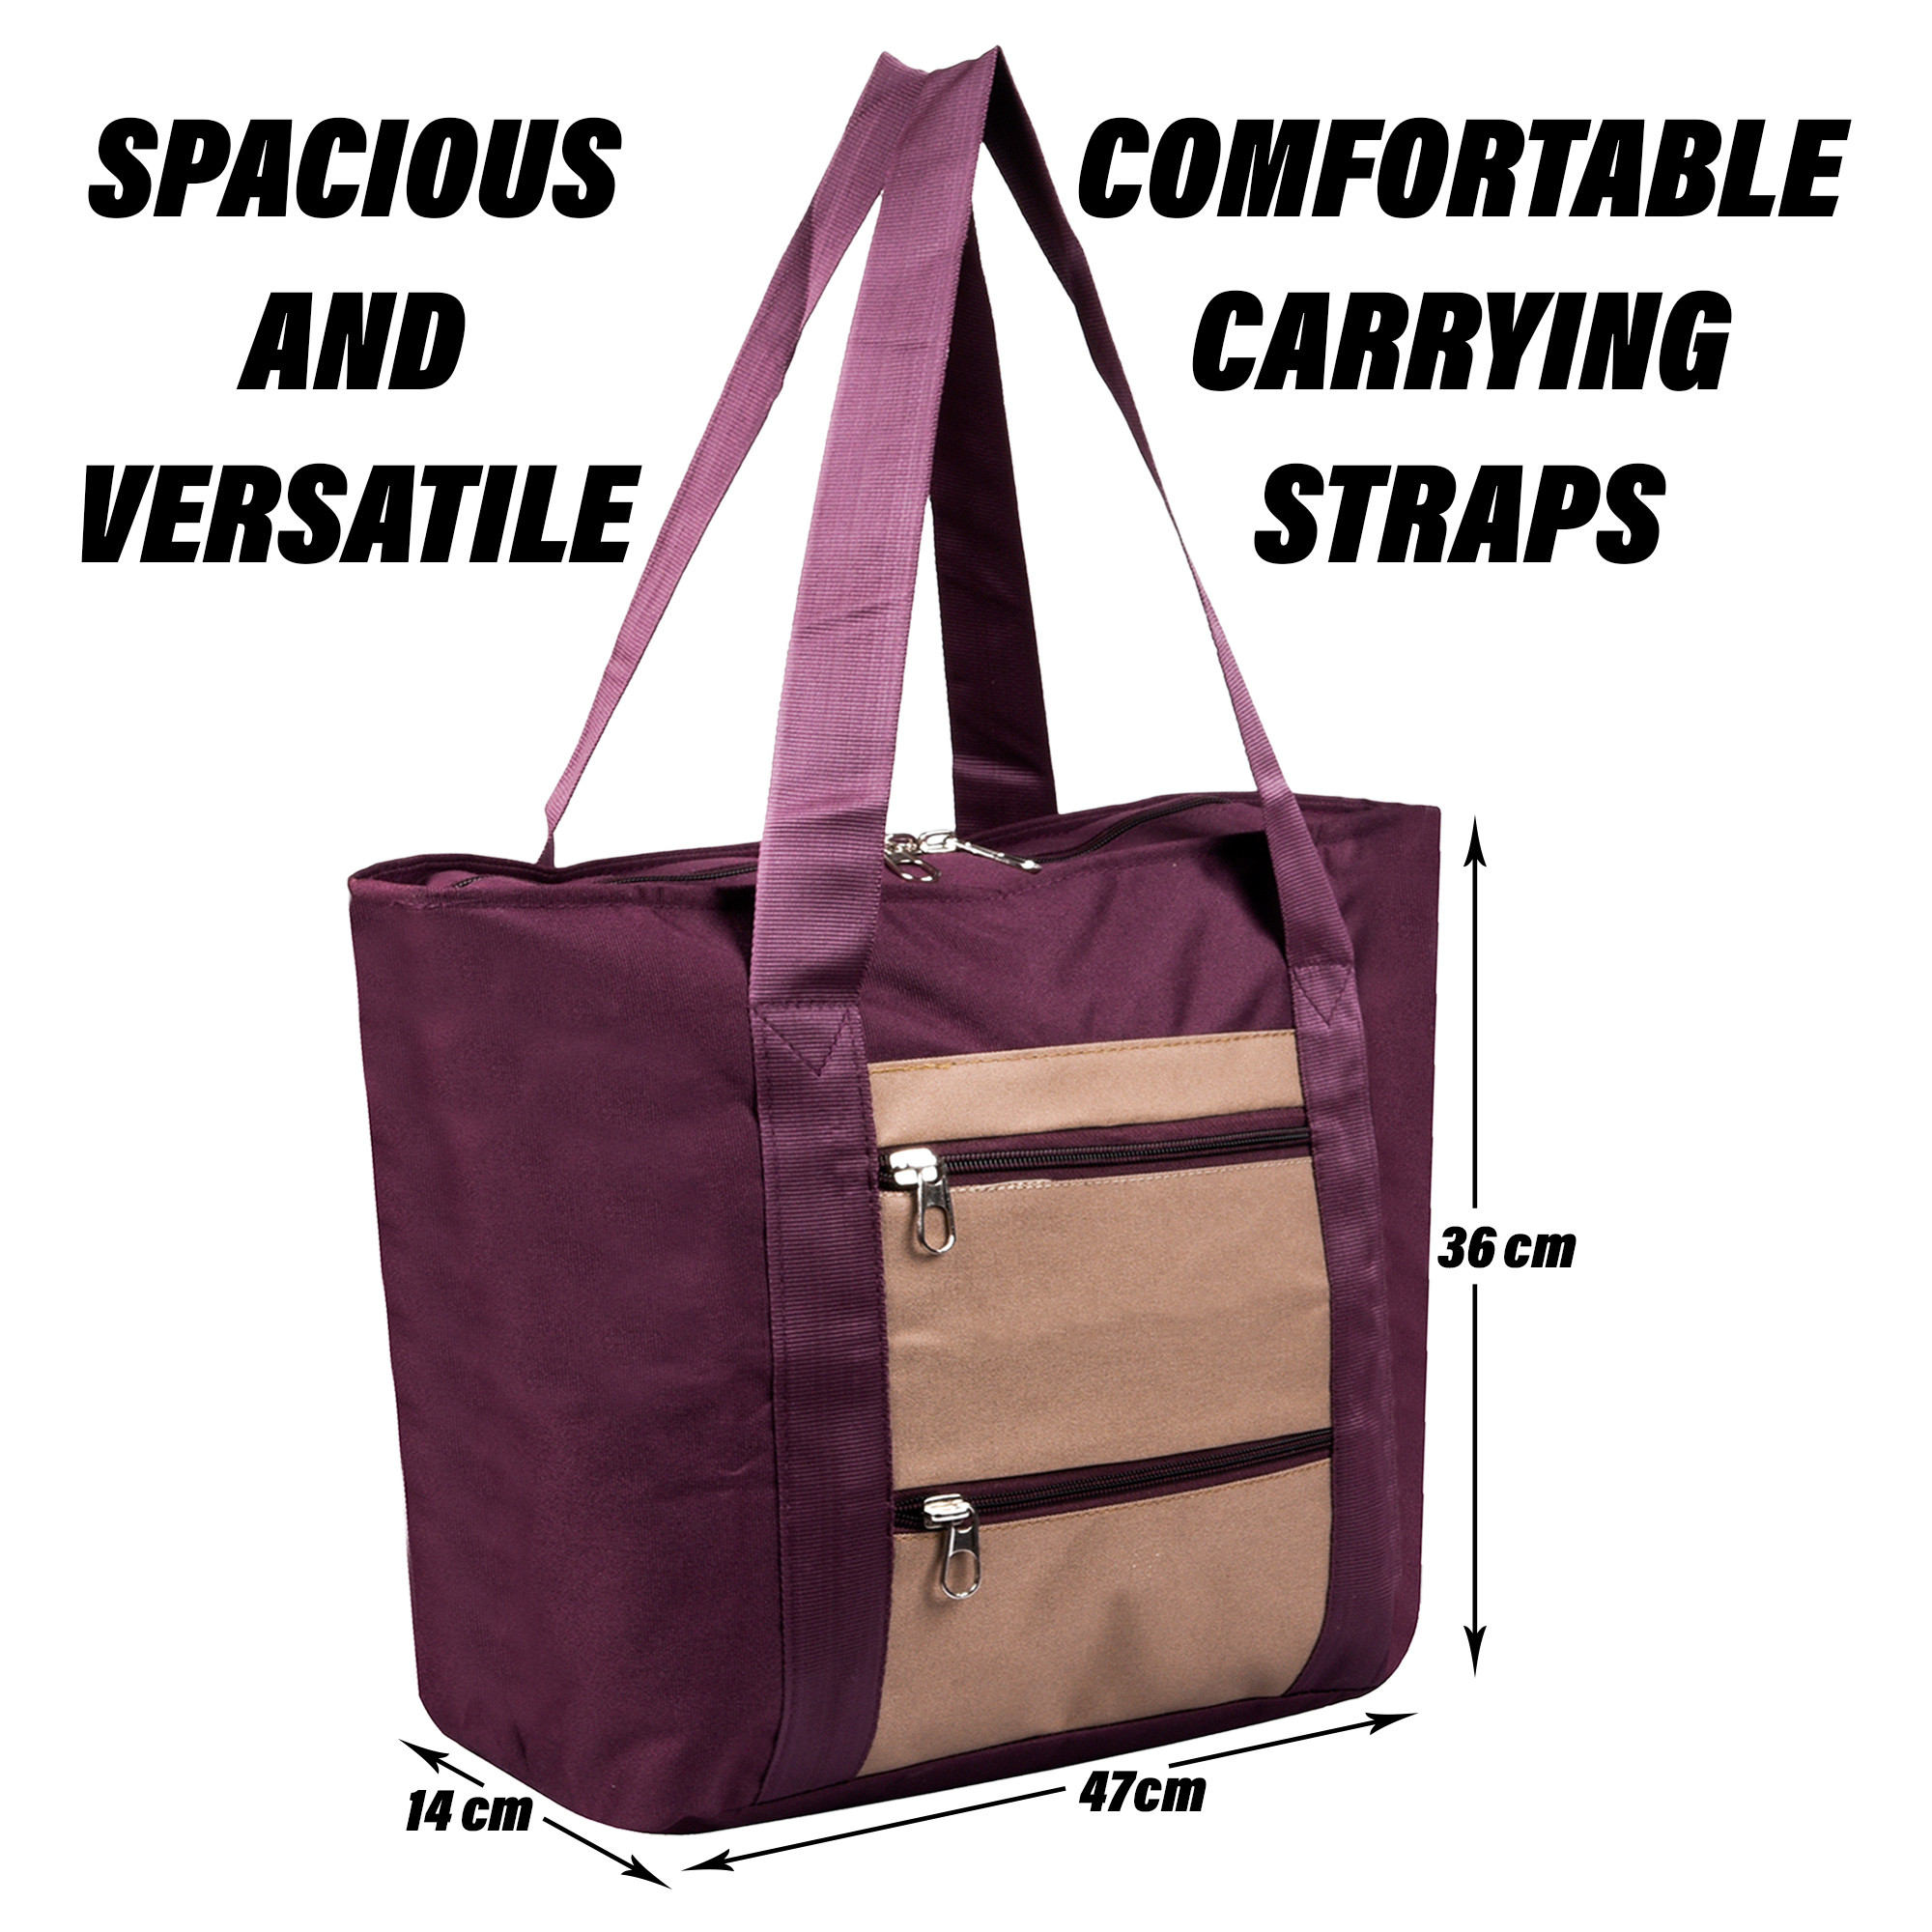 Kuber Industries Shopping Bag | Grocery Handbag | Front Zip Shopping Bag | Grocery Bag for Shopping | Vegetable Bag | Reusable Shopping Bag with Handle | Blue Zone | Brown